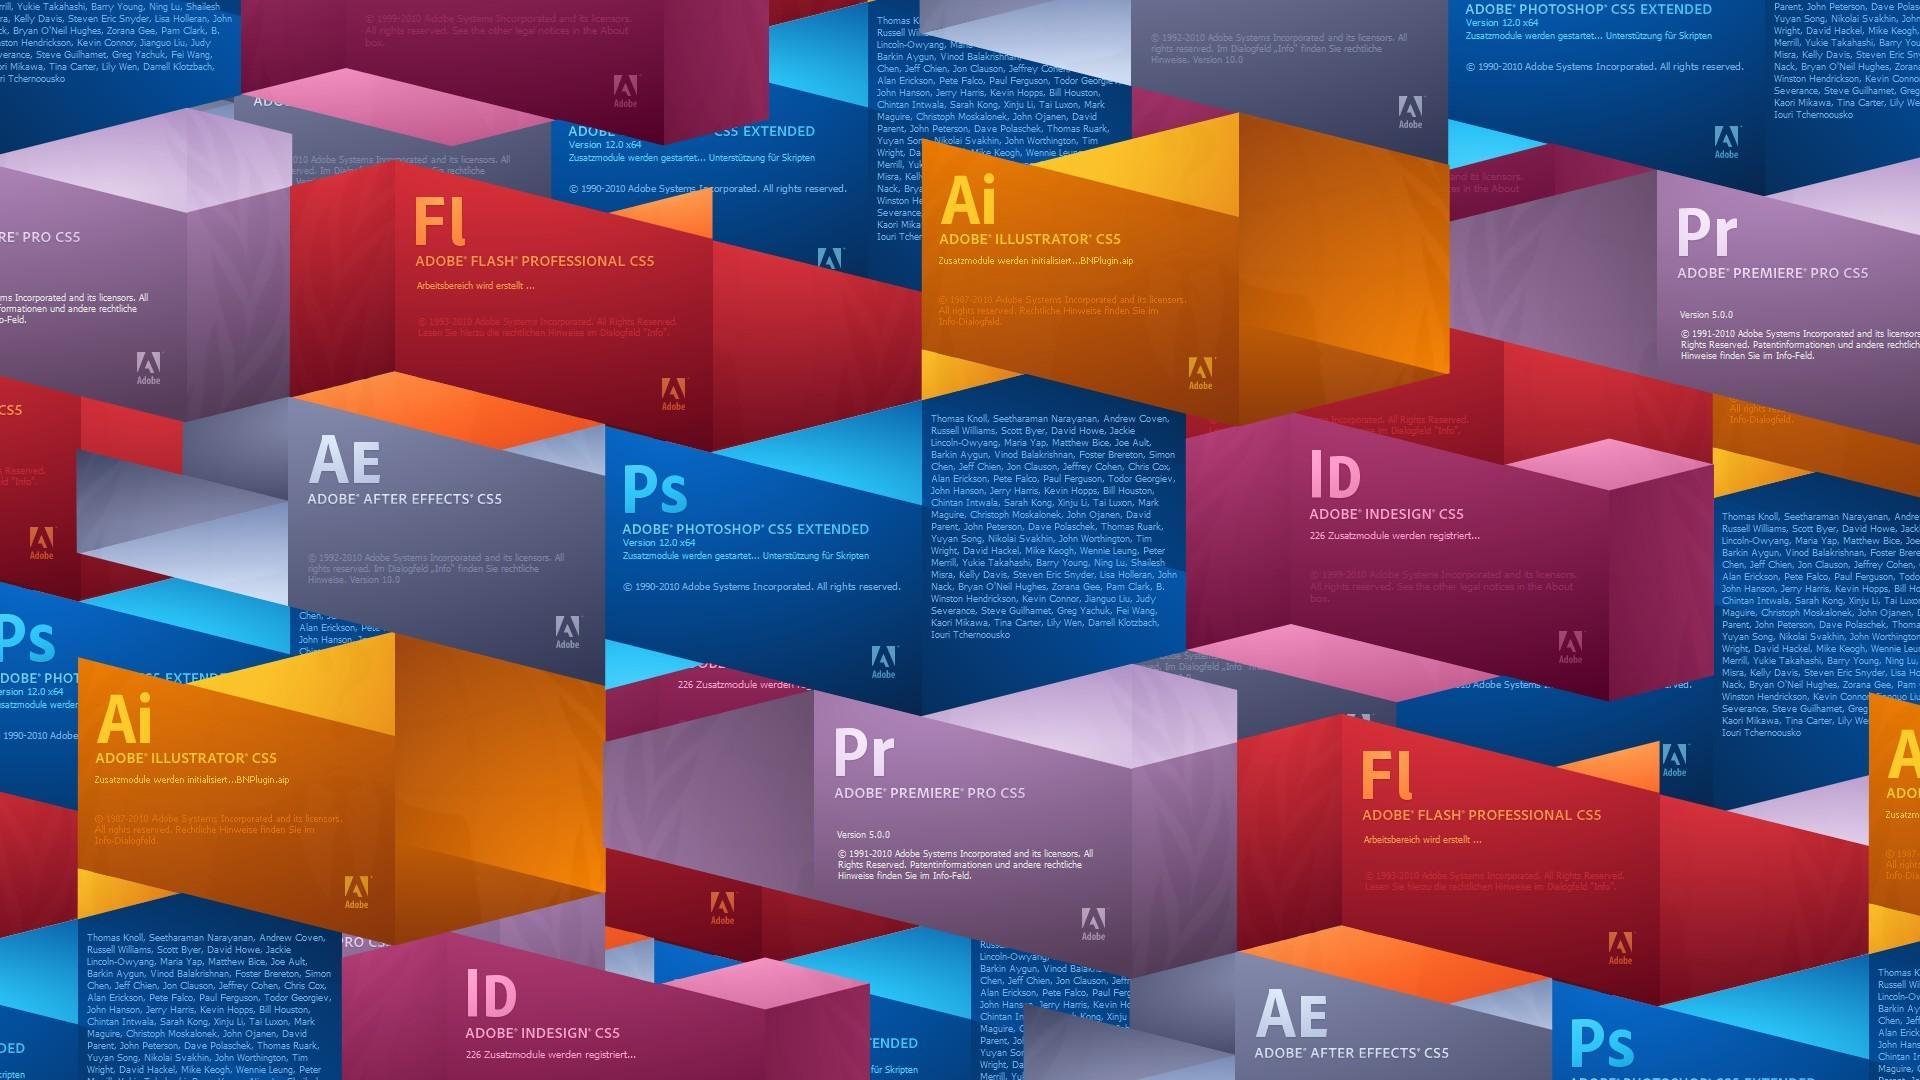 Adobe Systems Desktop Wallpaper Full Screen